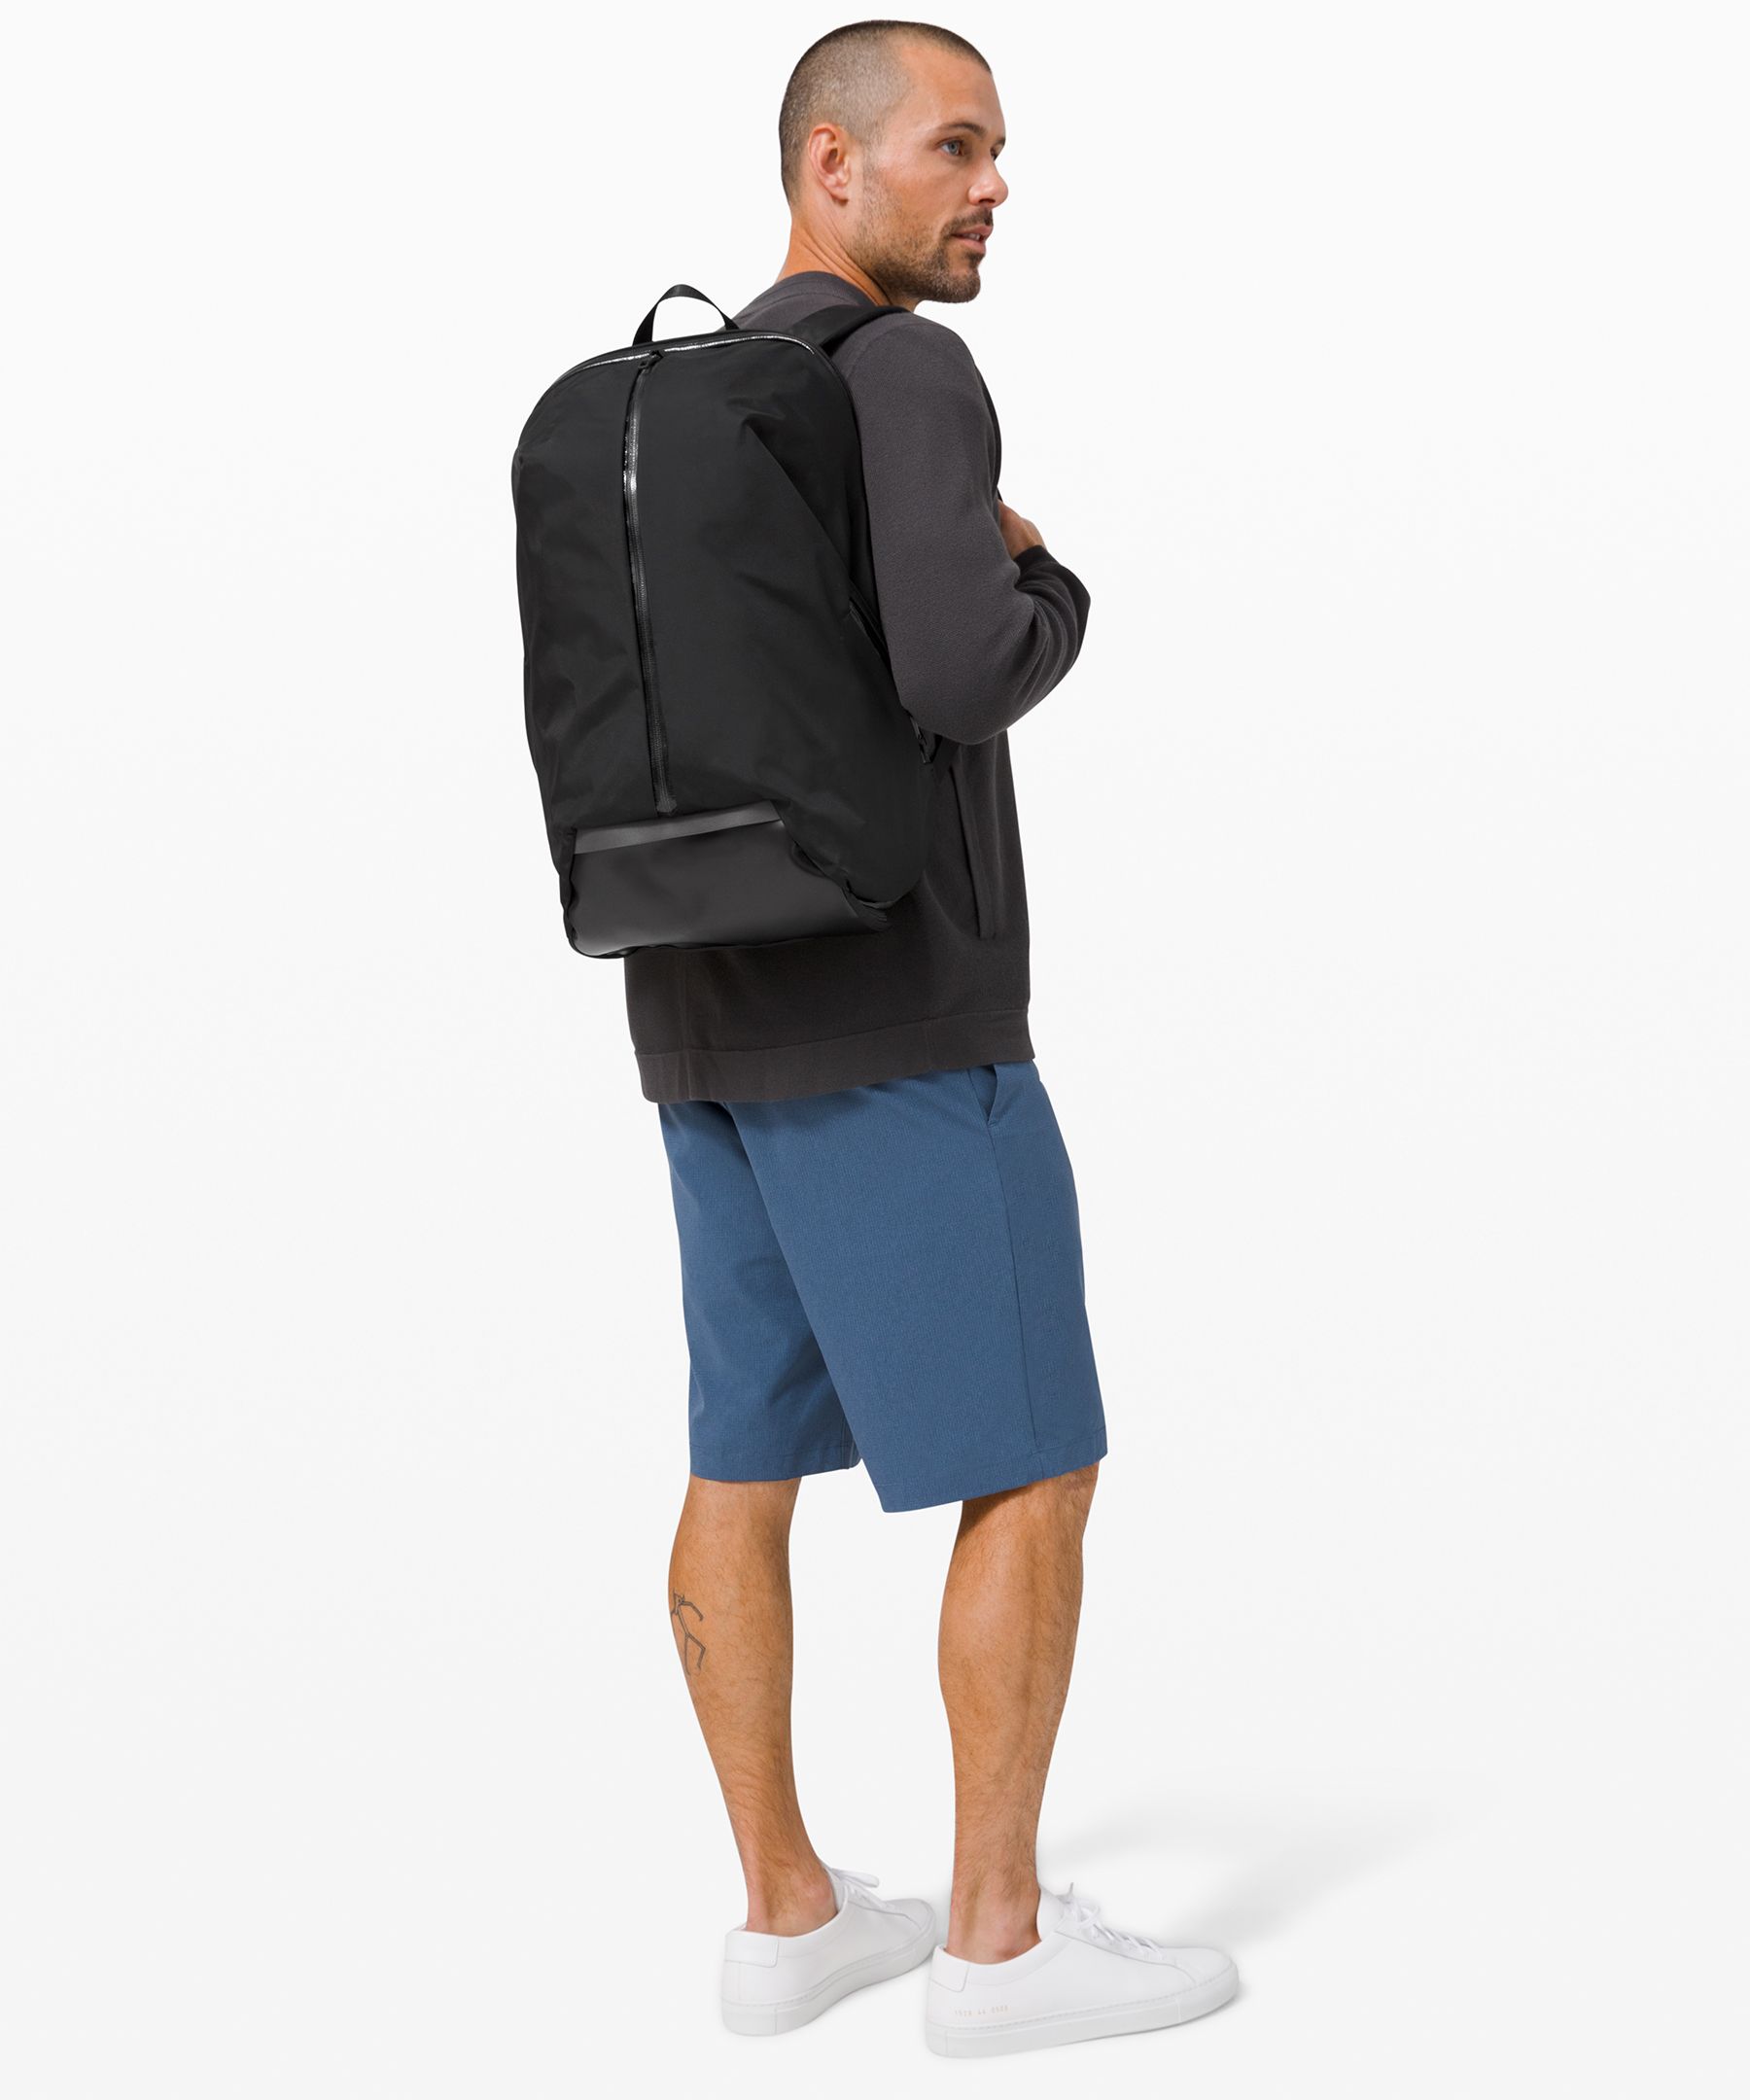 grey lululemon backpack